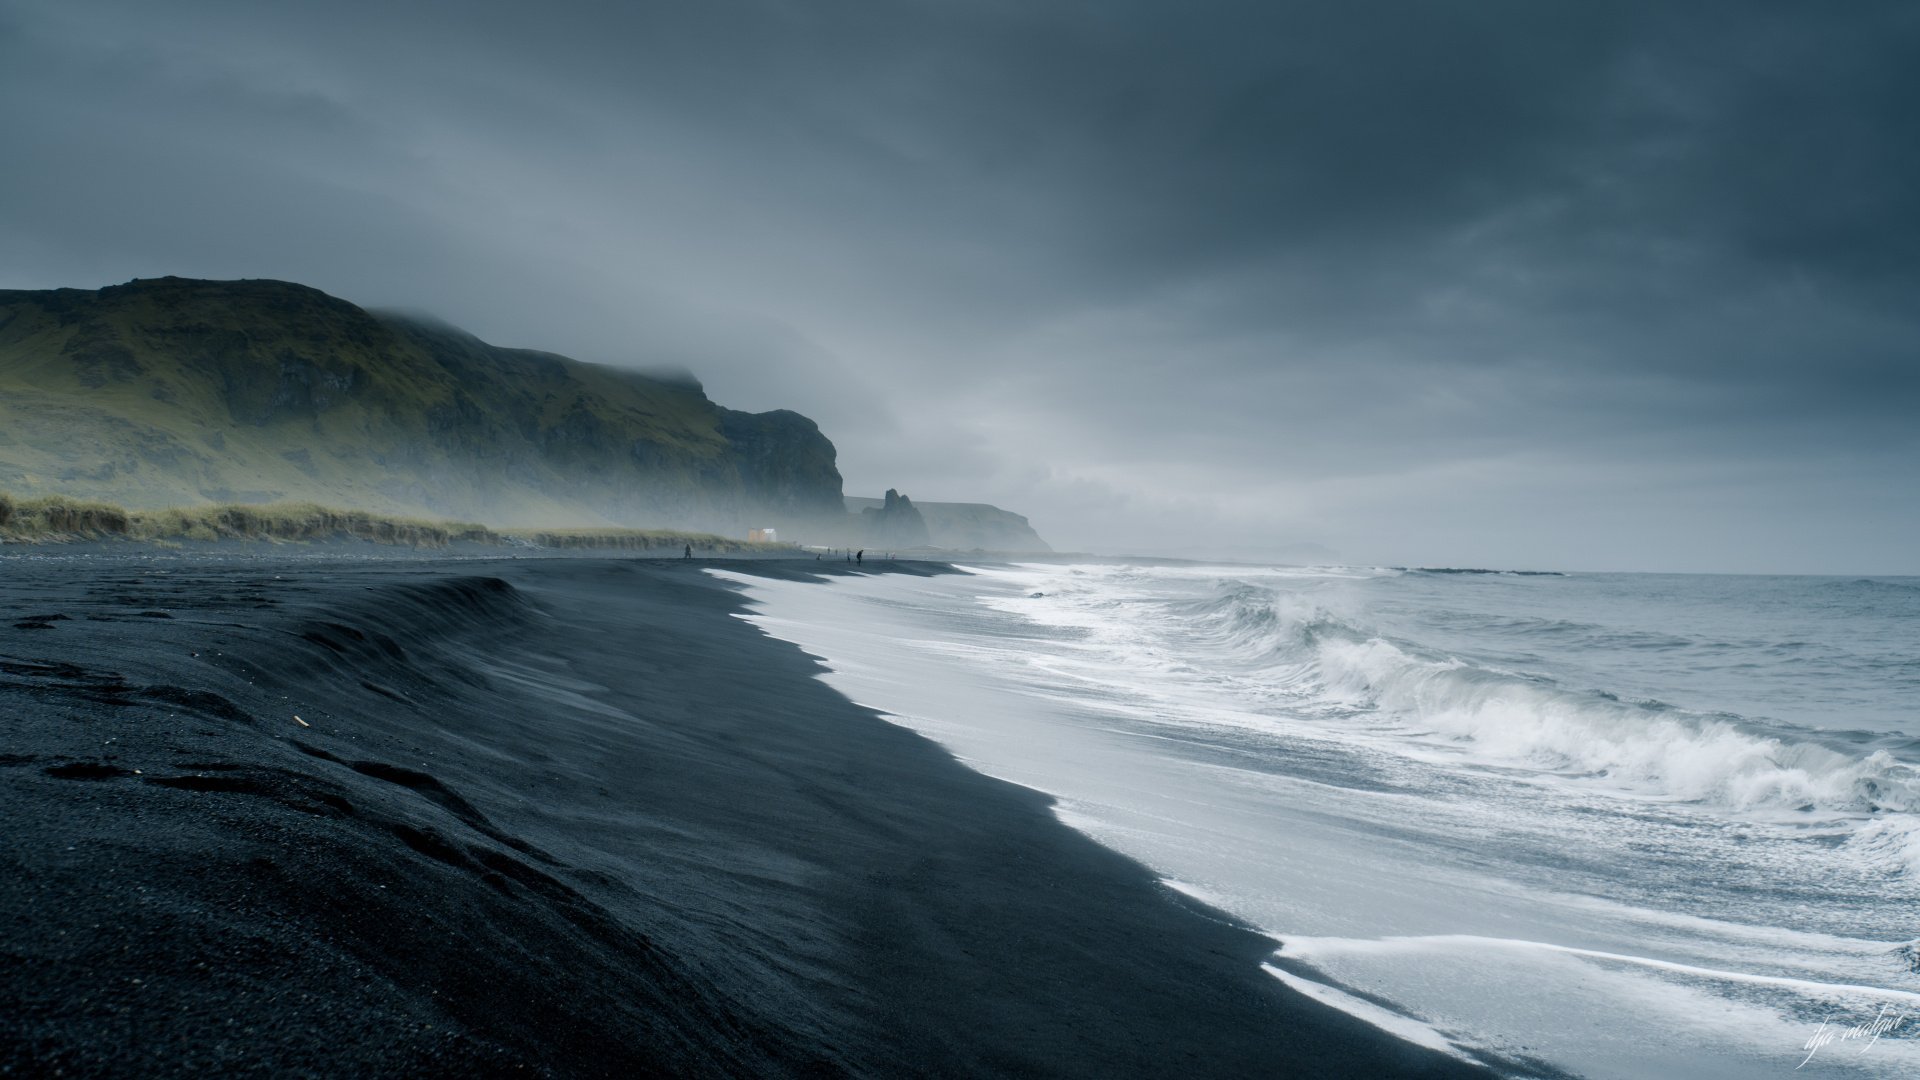 Берег океана в шторм. Исландия Атлантический океан. Рейнисфьяра Исландия. Исландия Атлантический океан берег. Исландия океан черный песок.